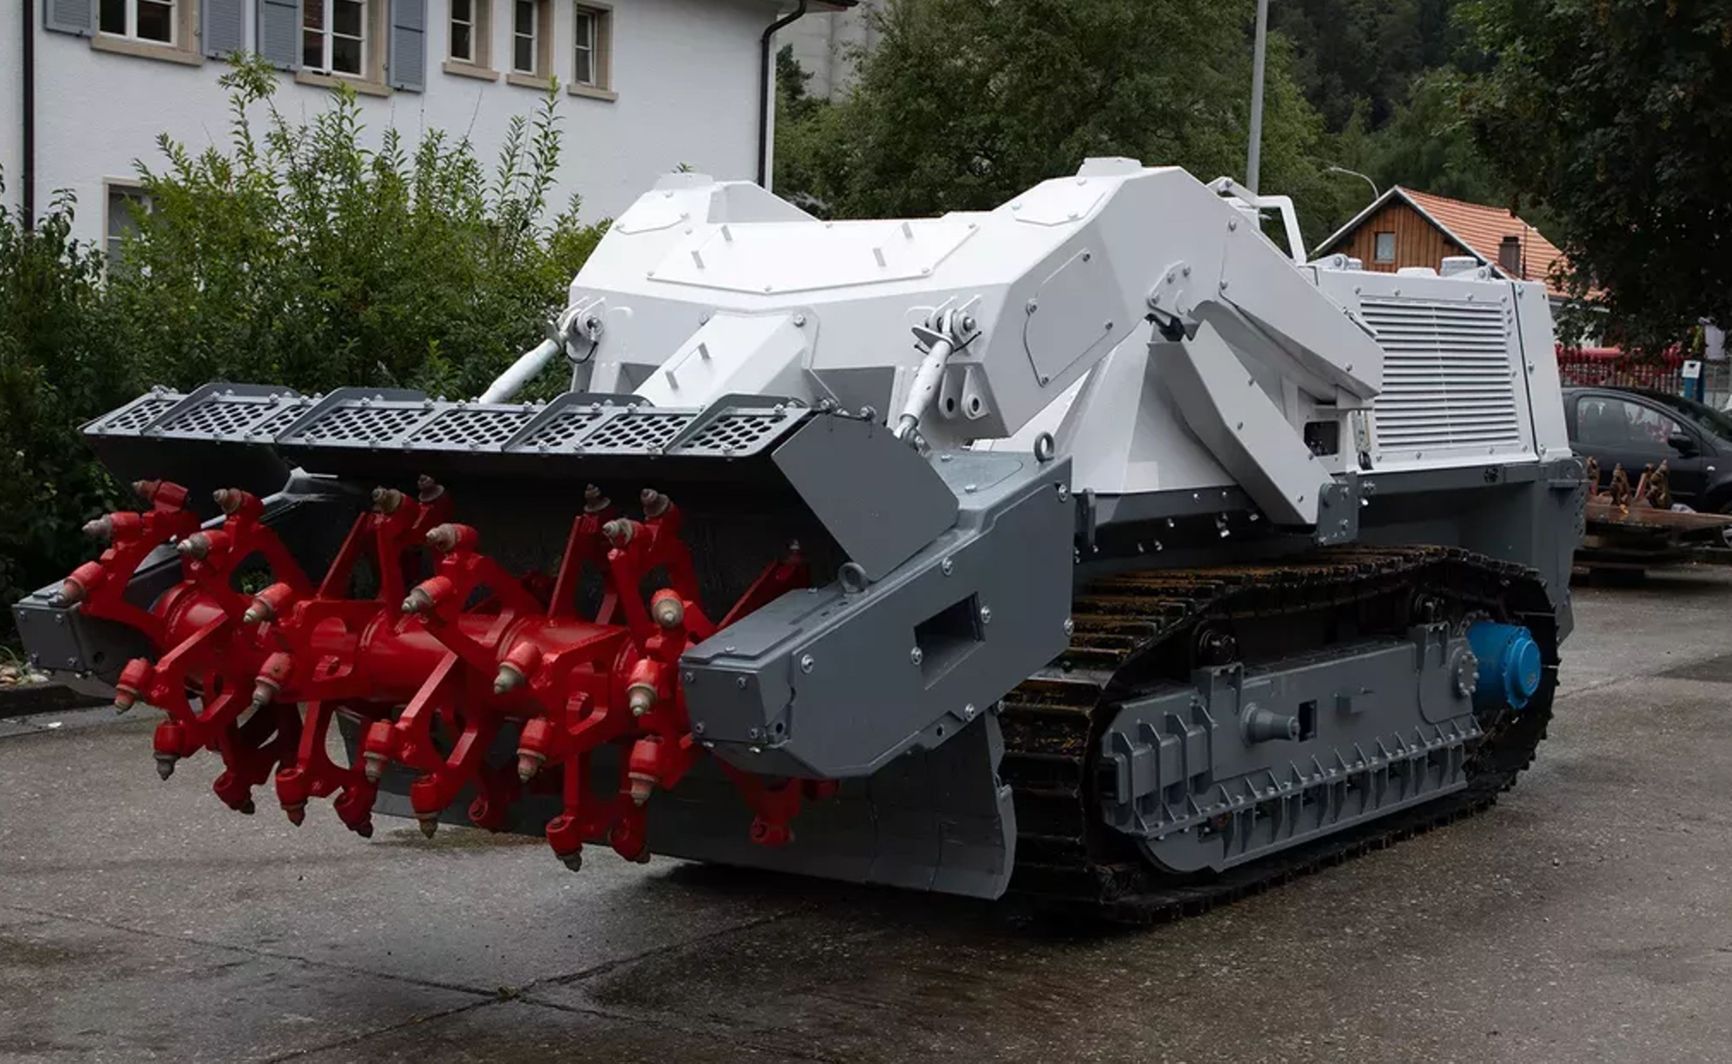 Switzerland has provided Ukraine with this remote demining vehicle